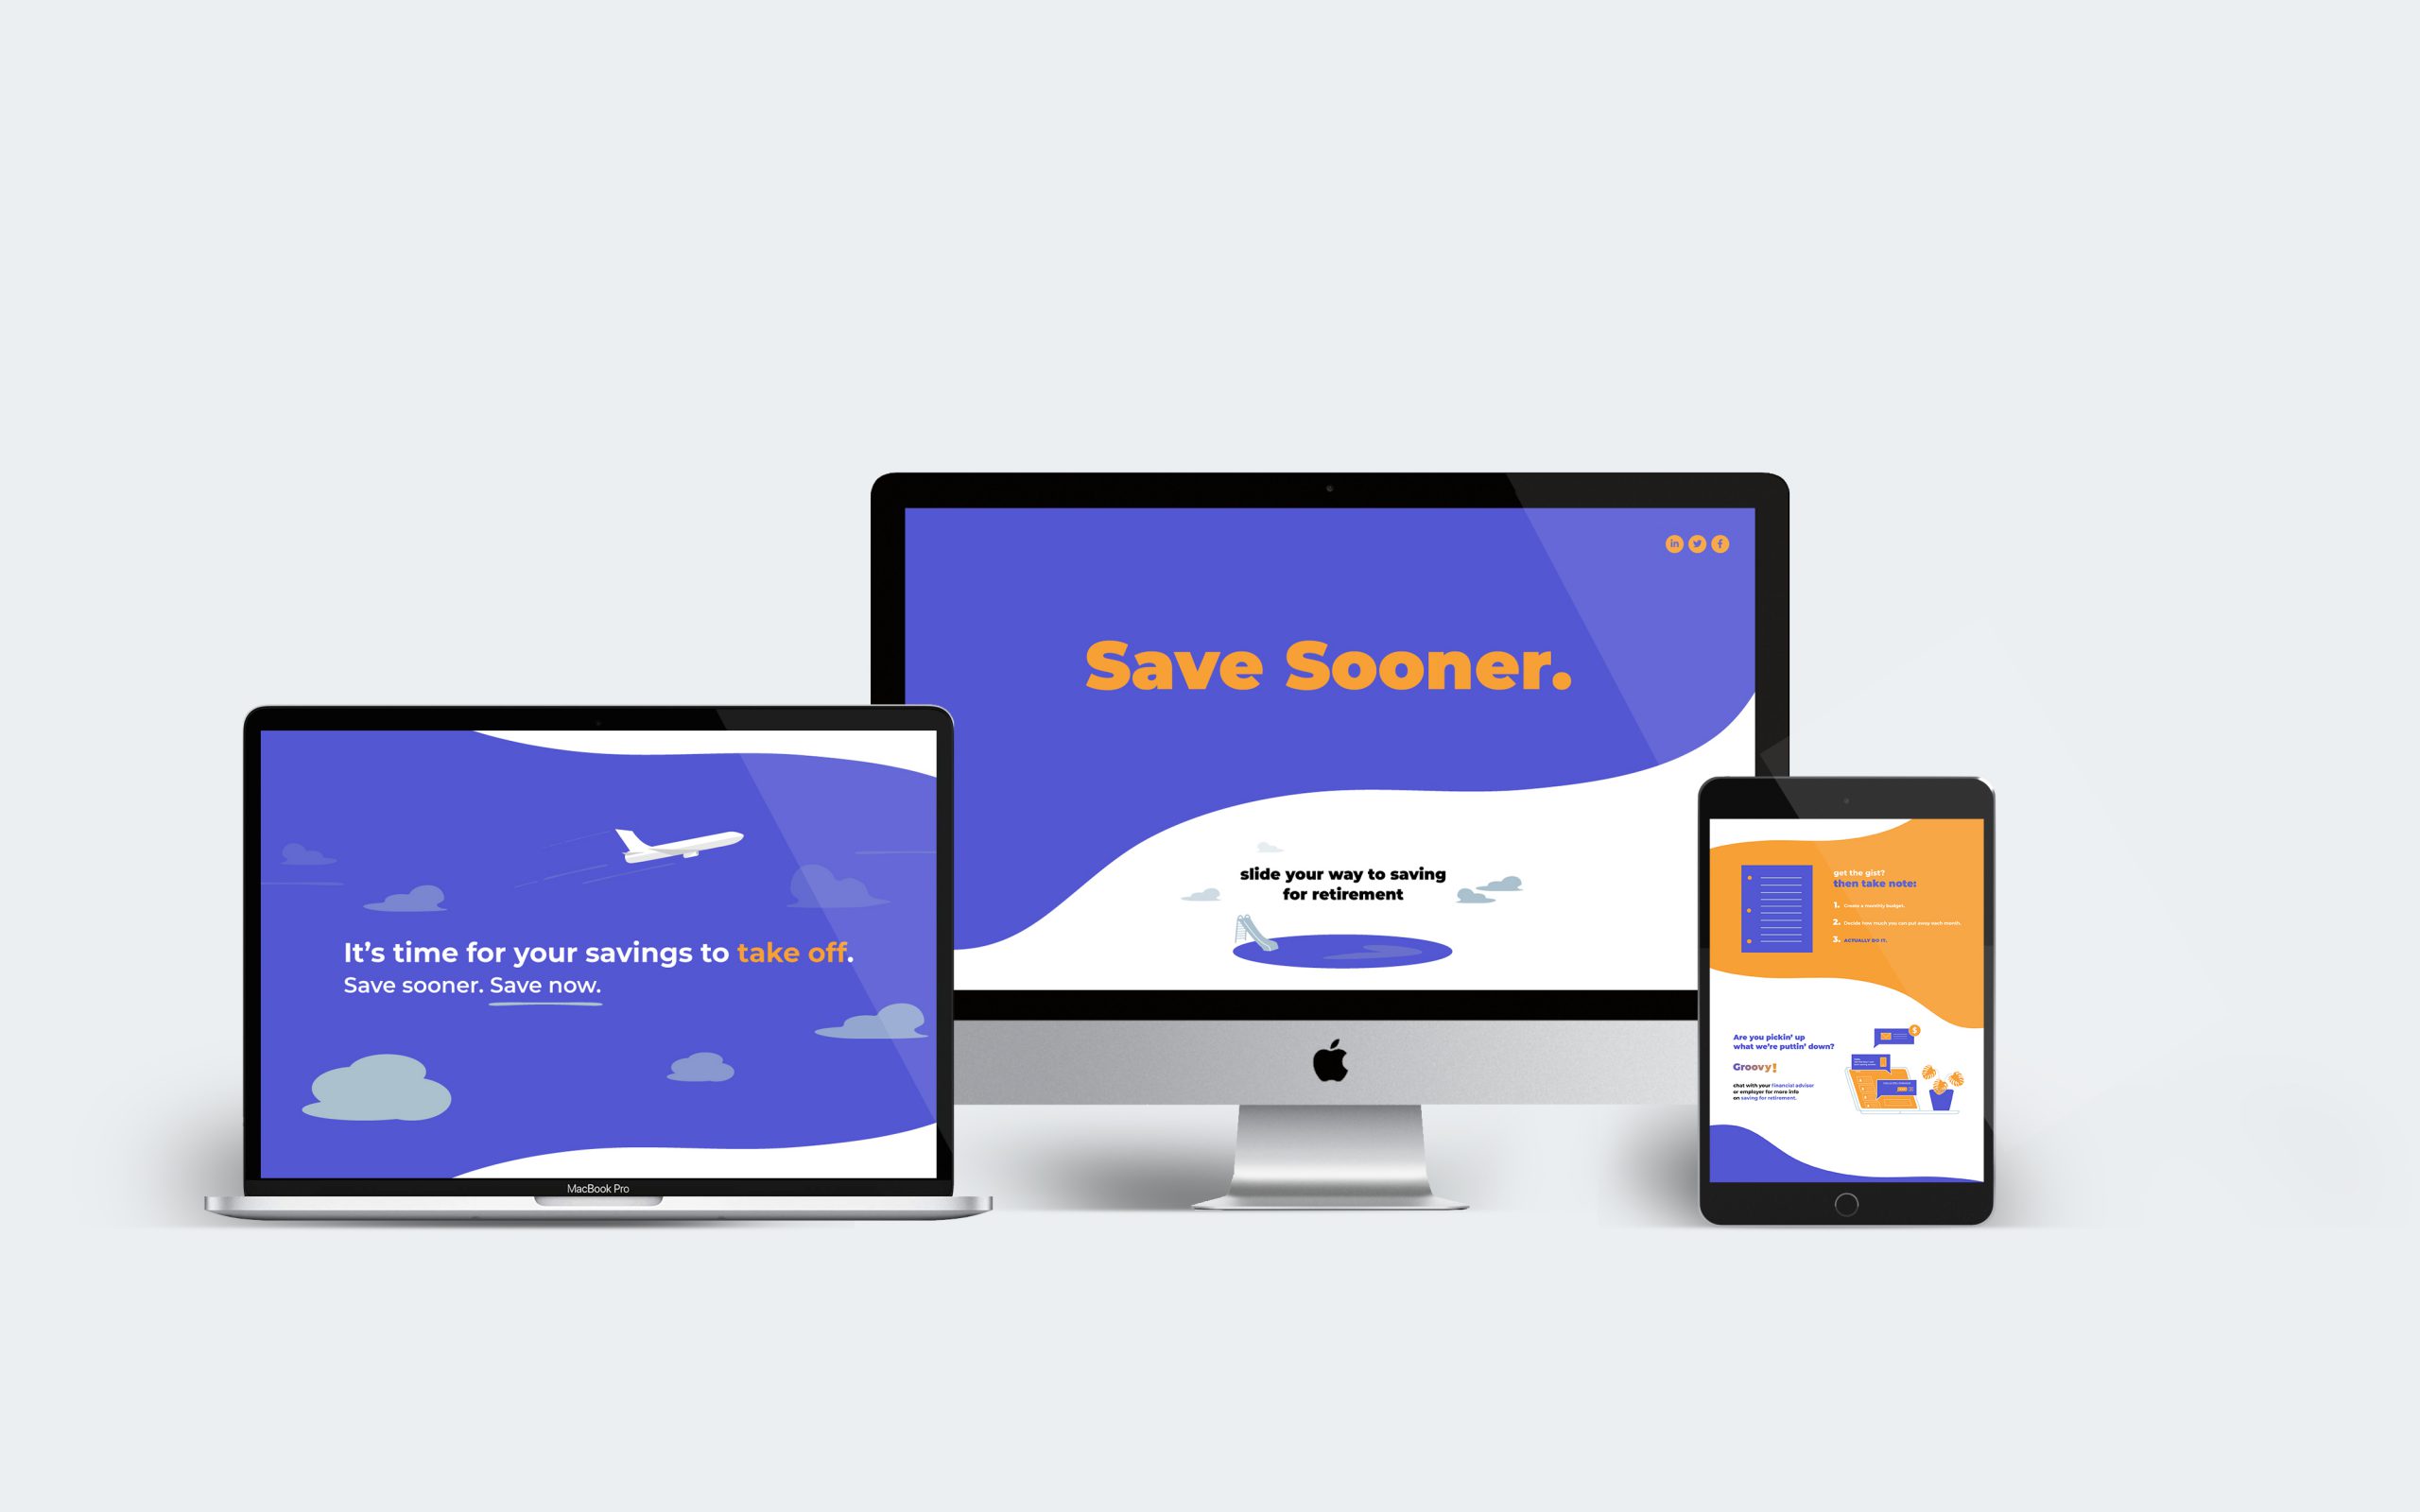 Save Sooner web design displayed across a desktop monitor, a laptop, and a tablet